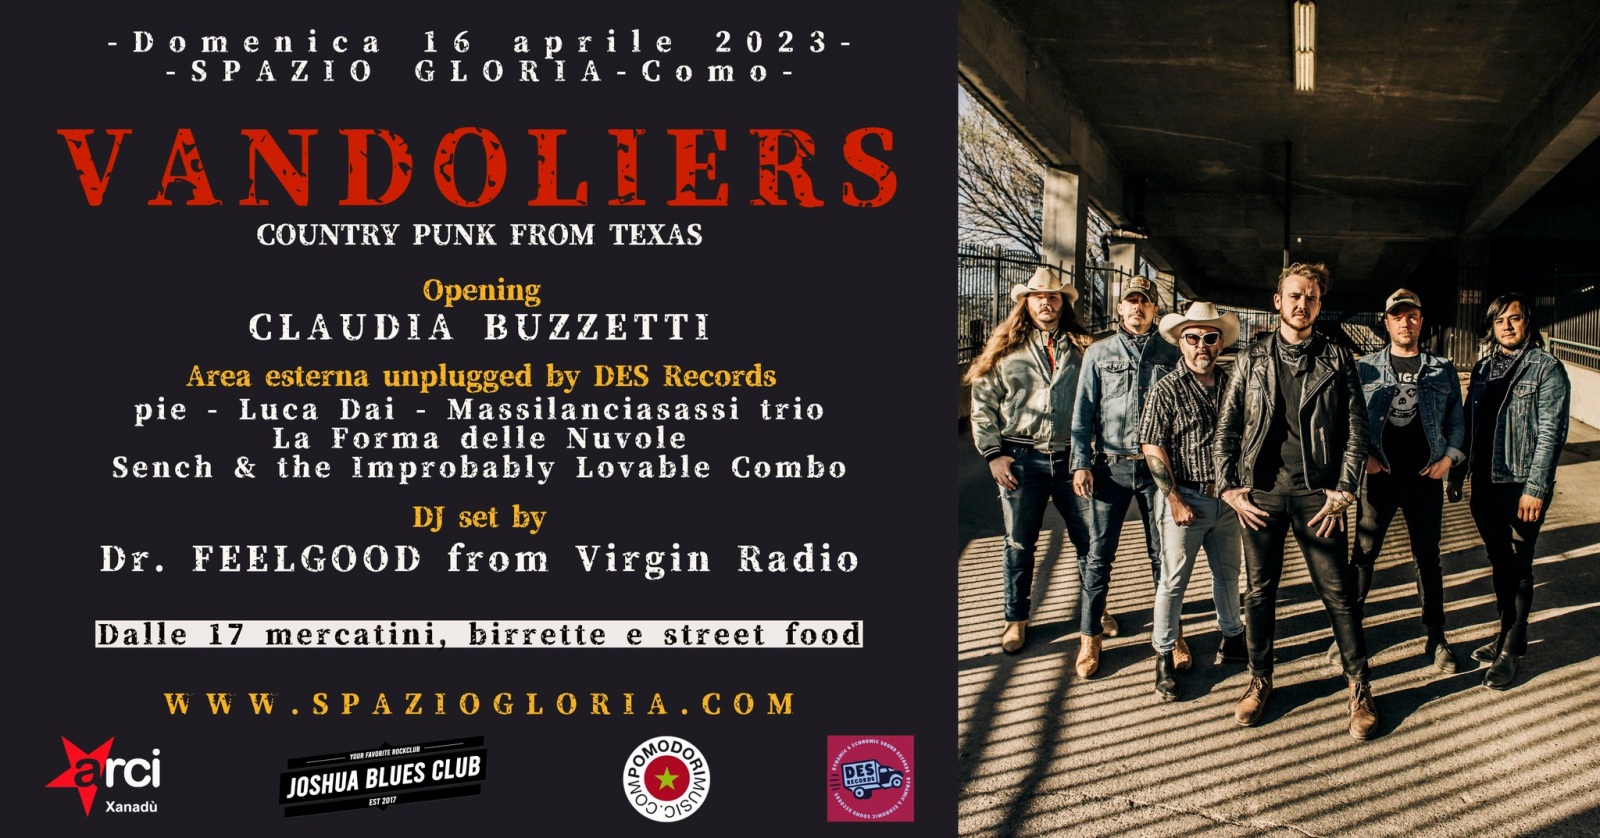 Vandoliers + claudia buzzetti + des records artists